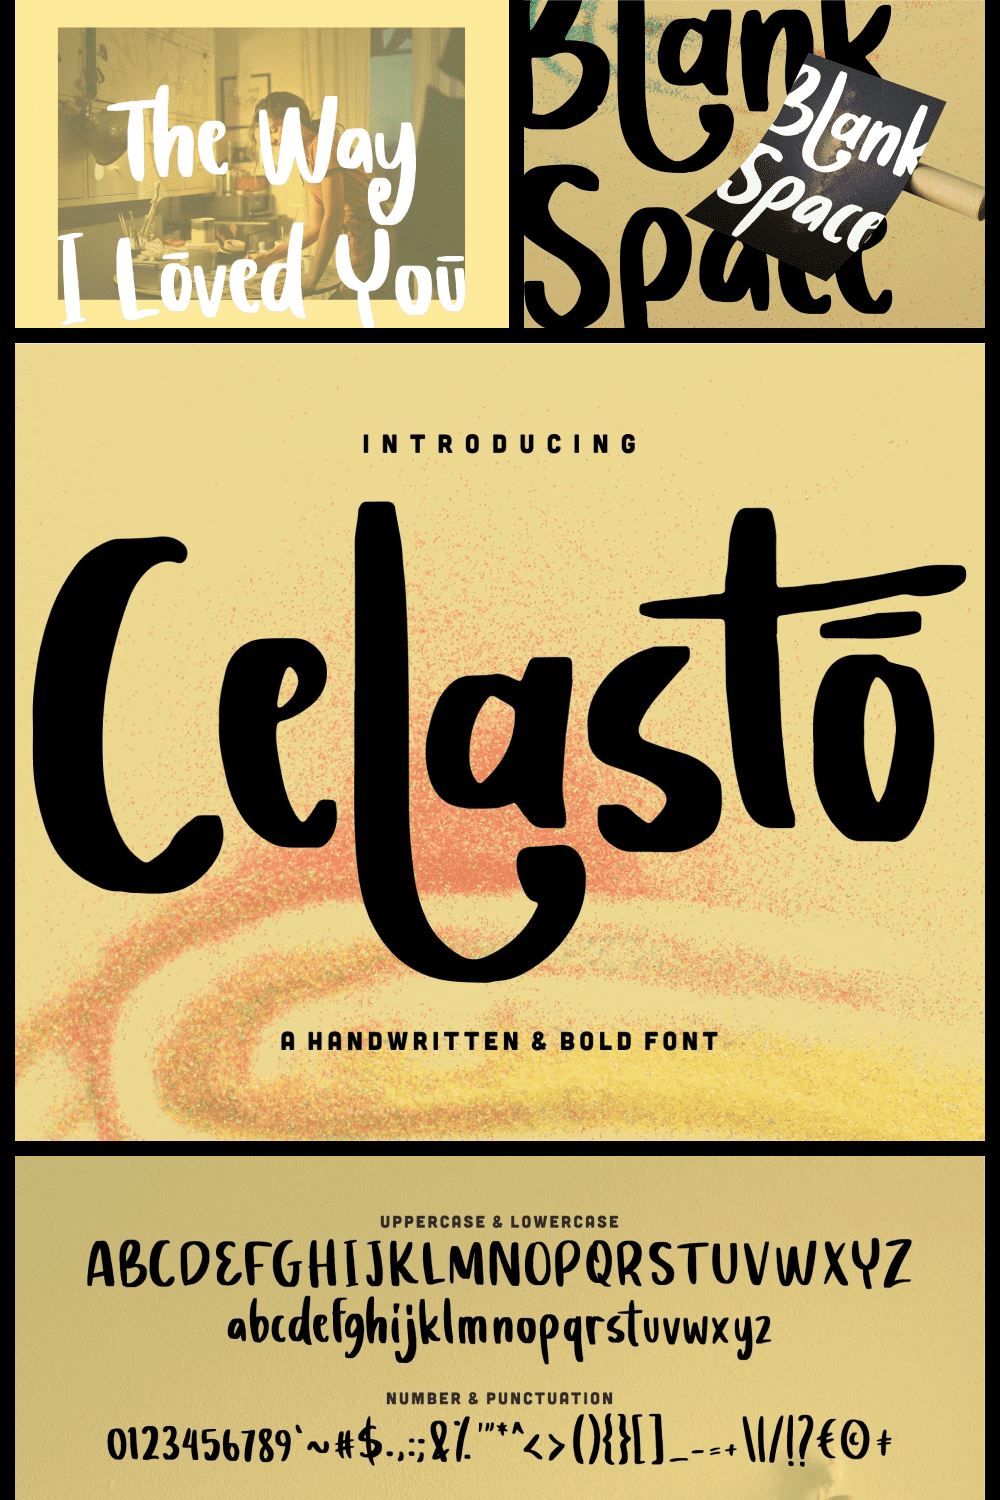 Celasto - a handwritten and bold font.